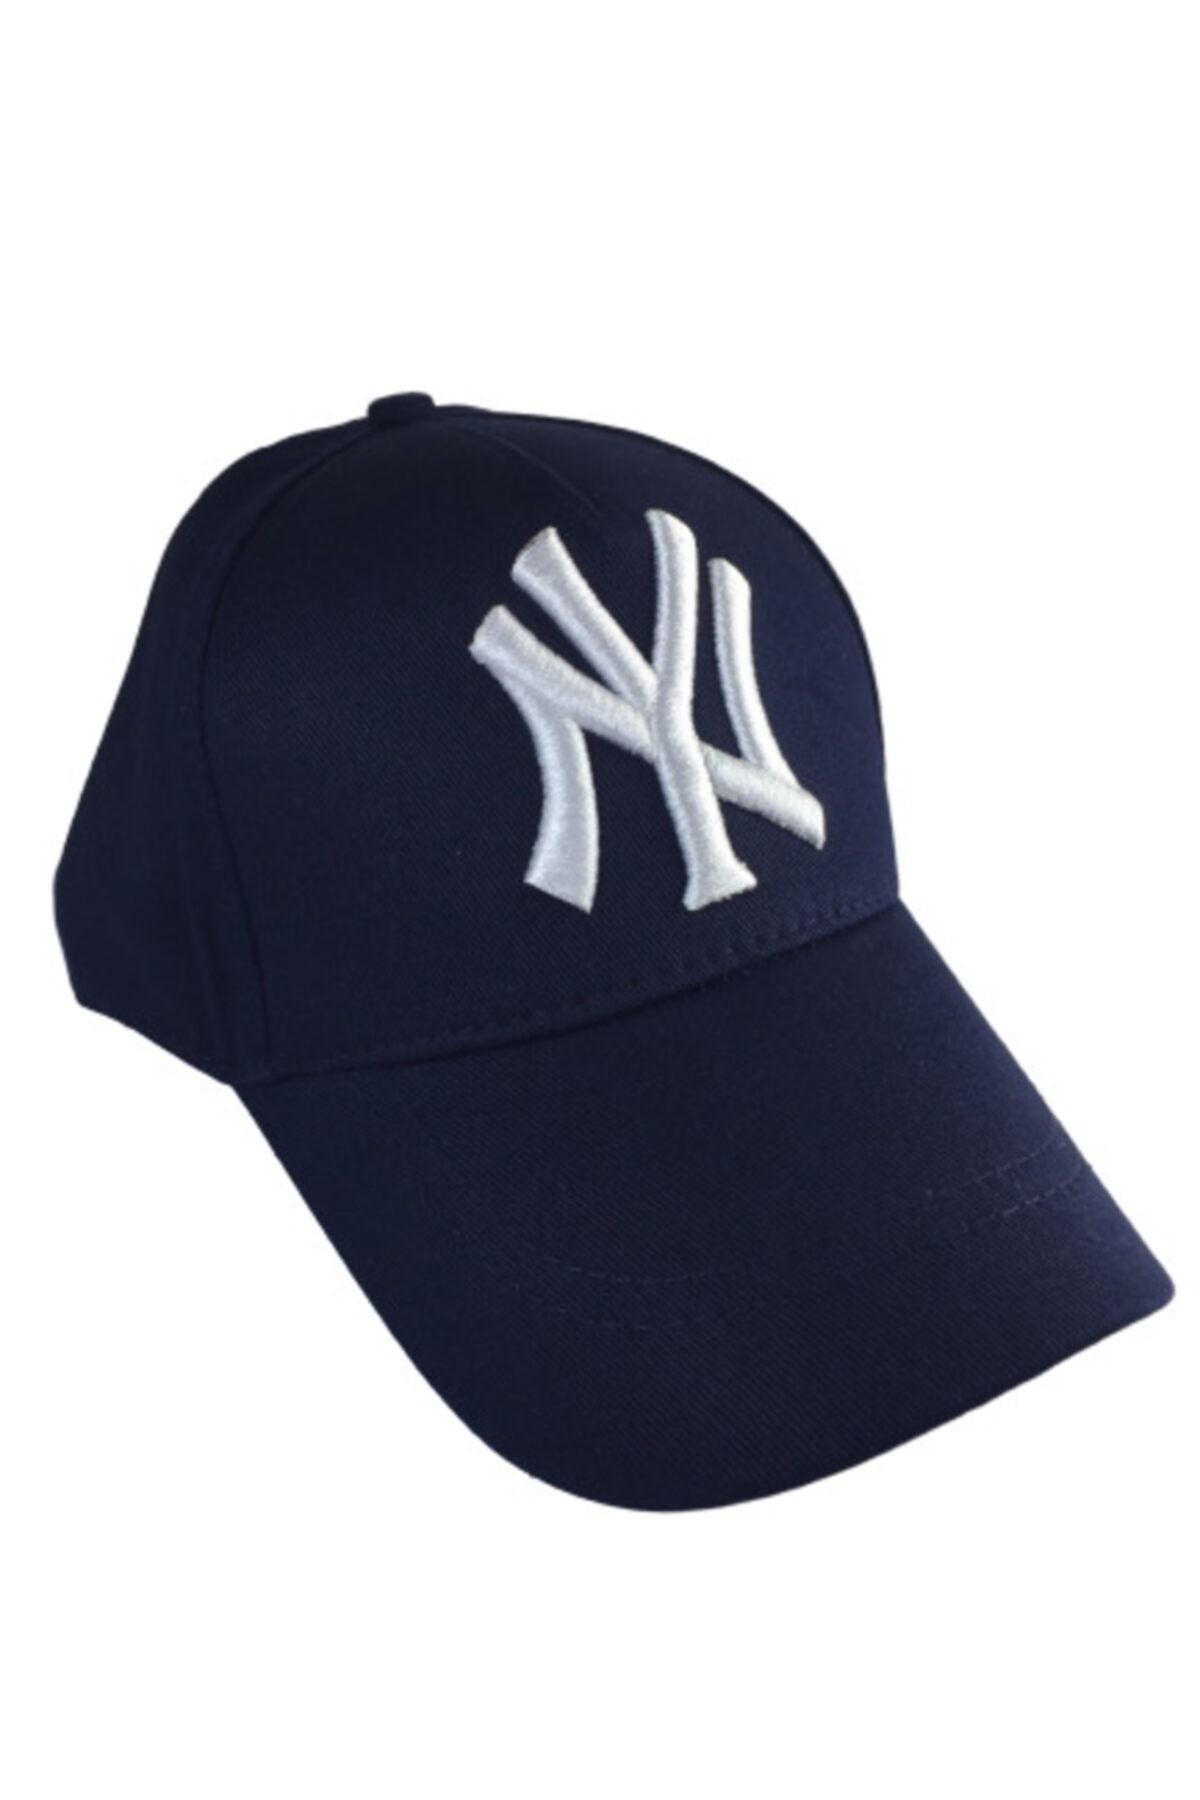 Orçun Özkarlıklı Ny New York Yankees Beyzbol Şapka Lacivert